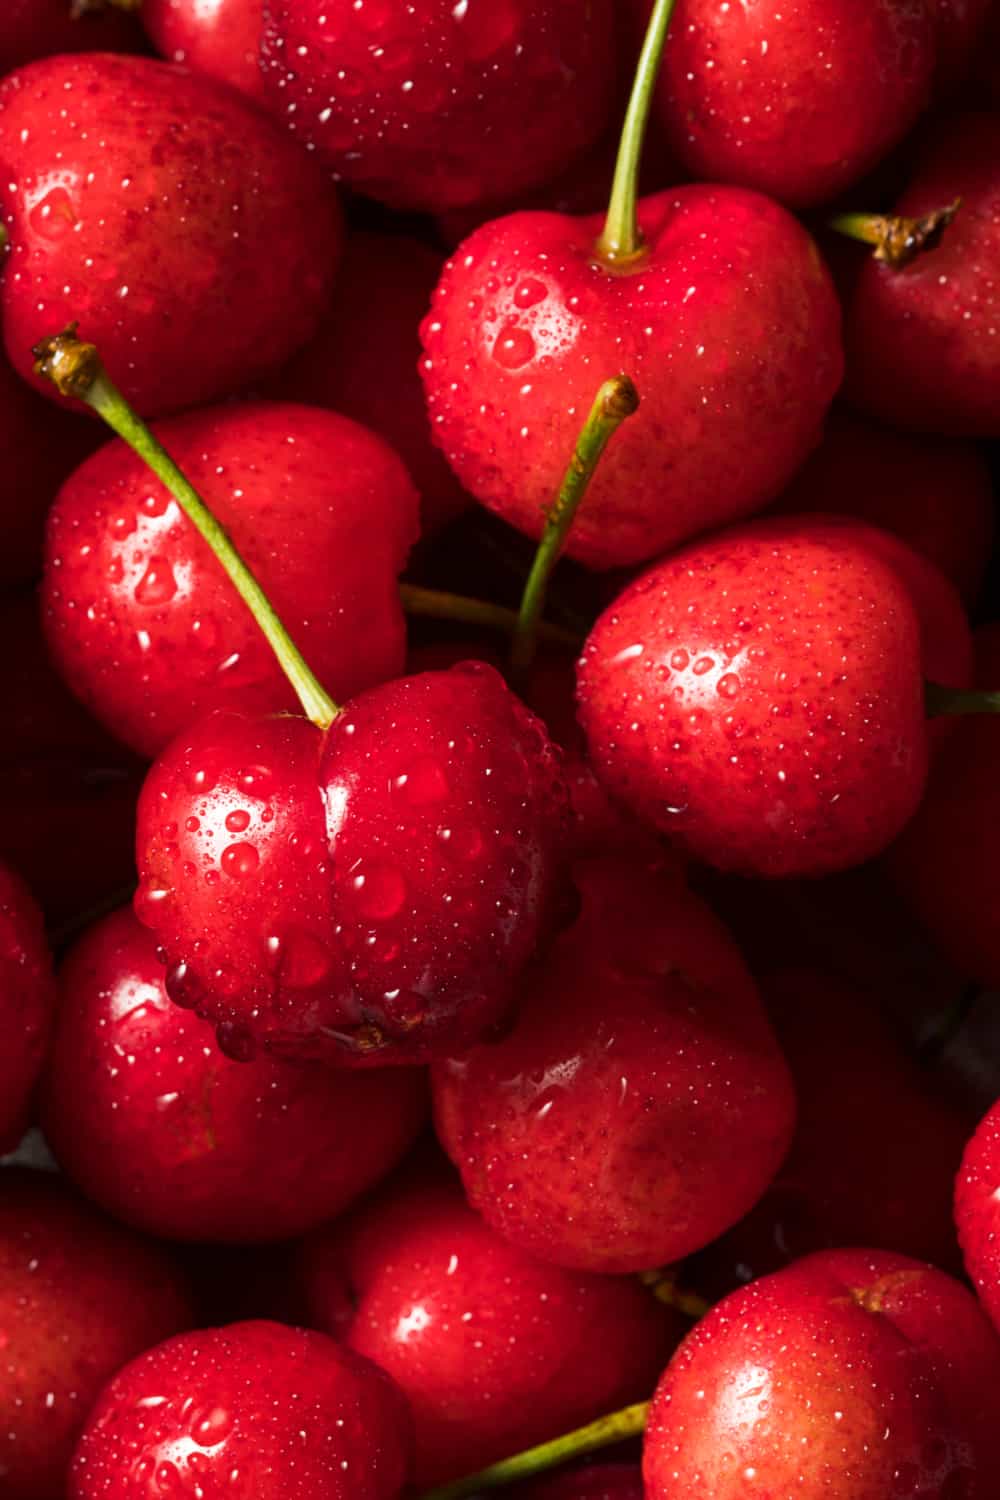 How long do cherries last